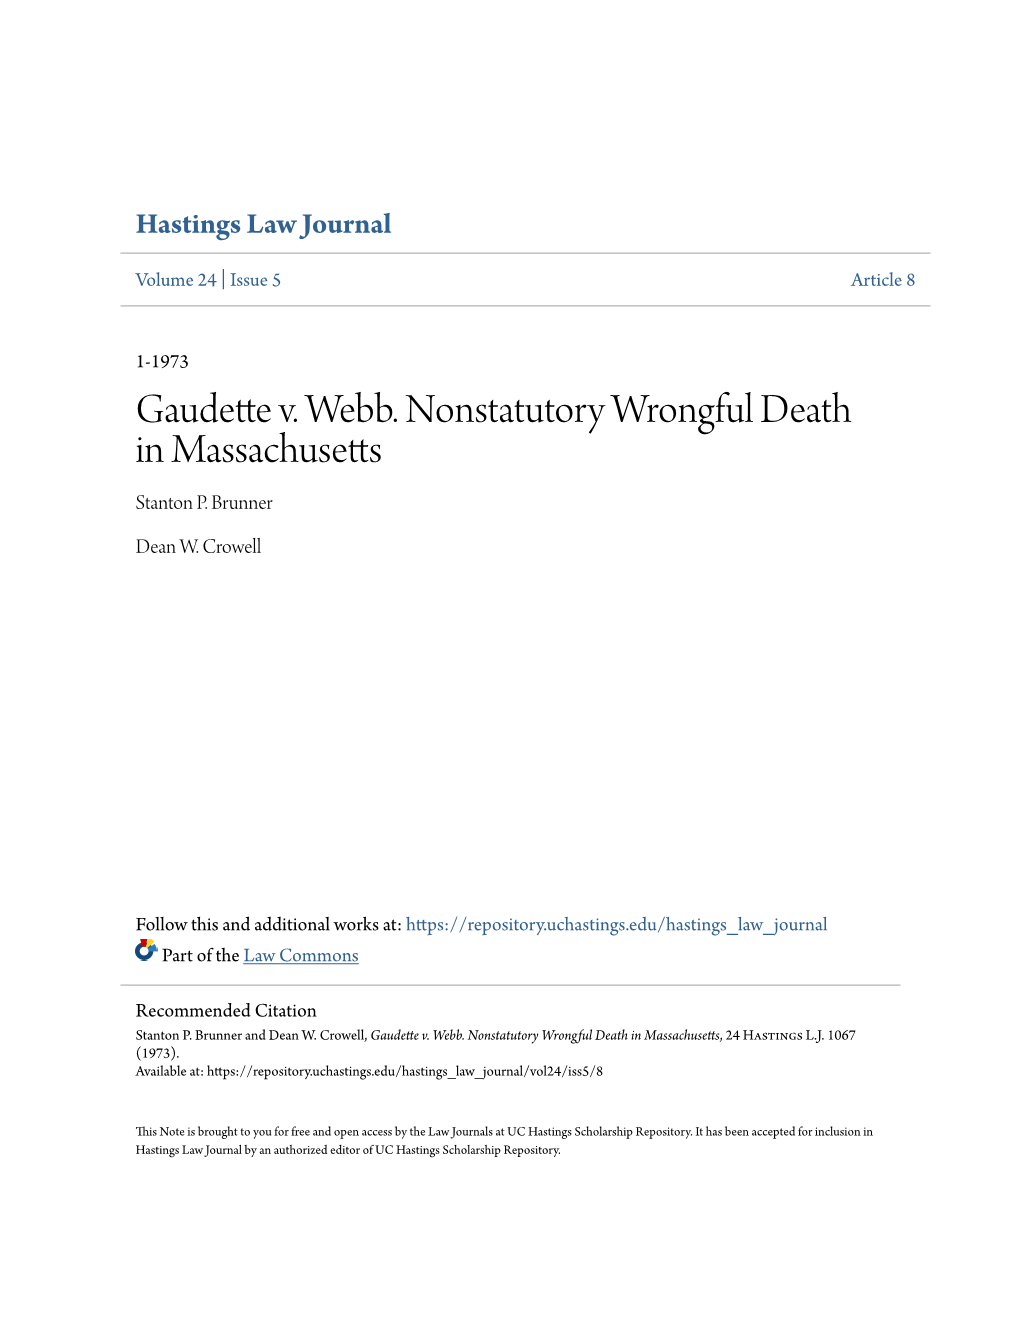 Gaudette V. Webb. Nonstatutory Wrongful Death in Massachusetts Stanton P